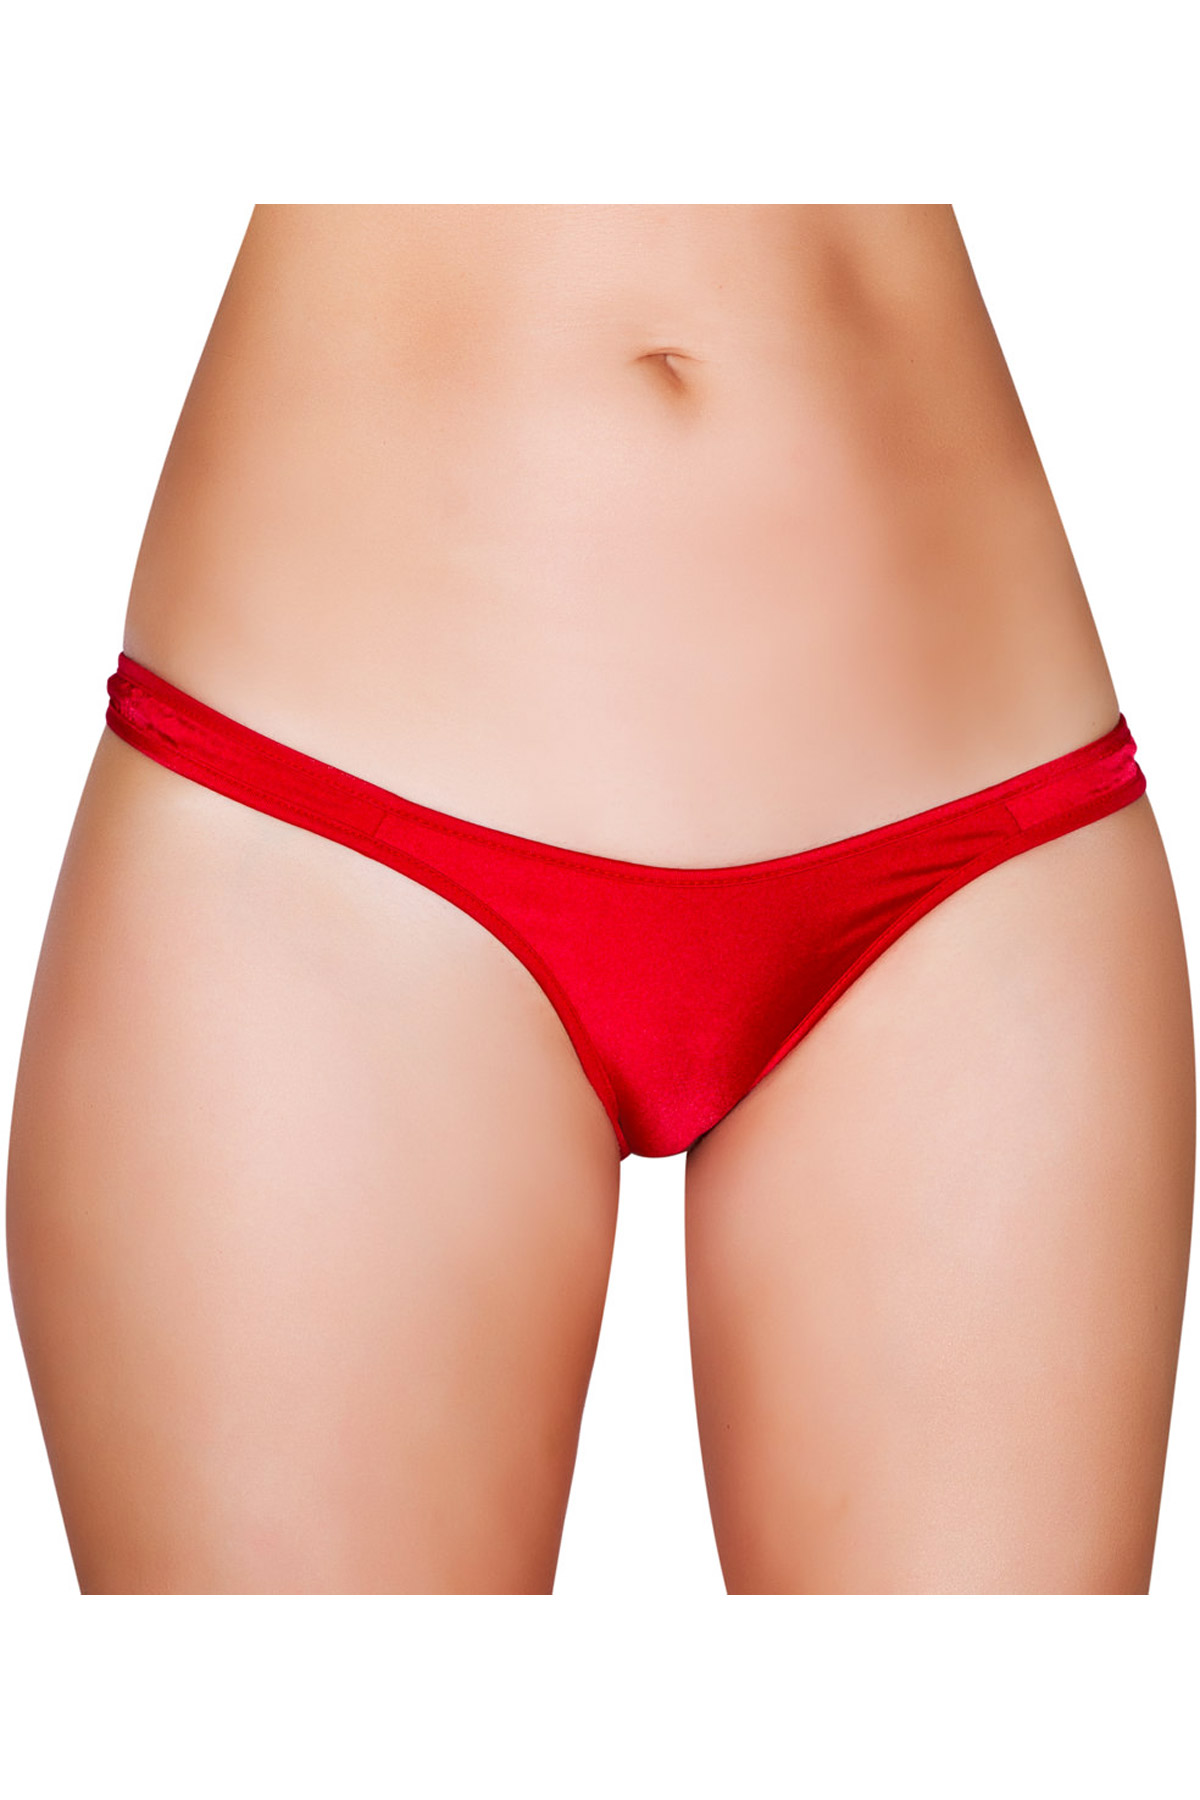 Skimpy Dayclub Tie Side Bikini Bottom Thong Panty Panties Clubwear Adult  Women